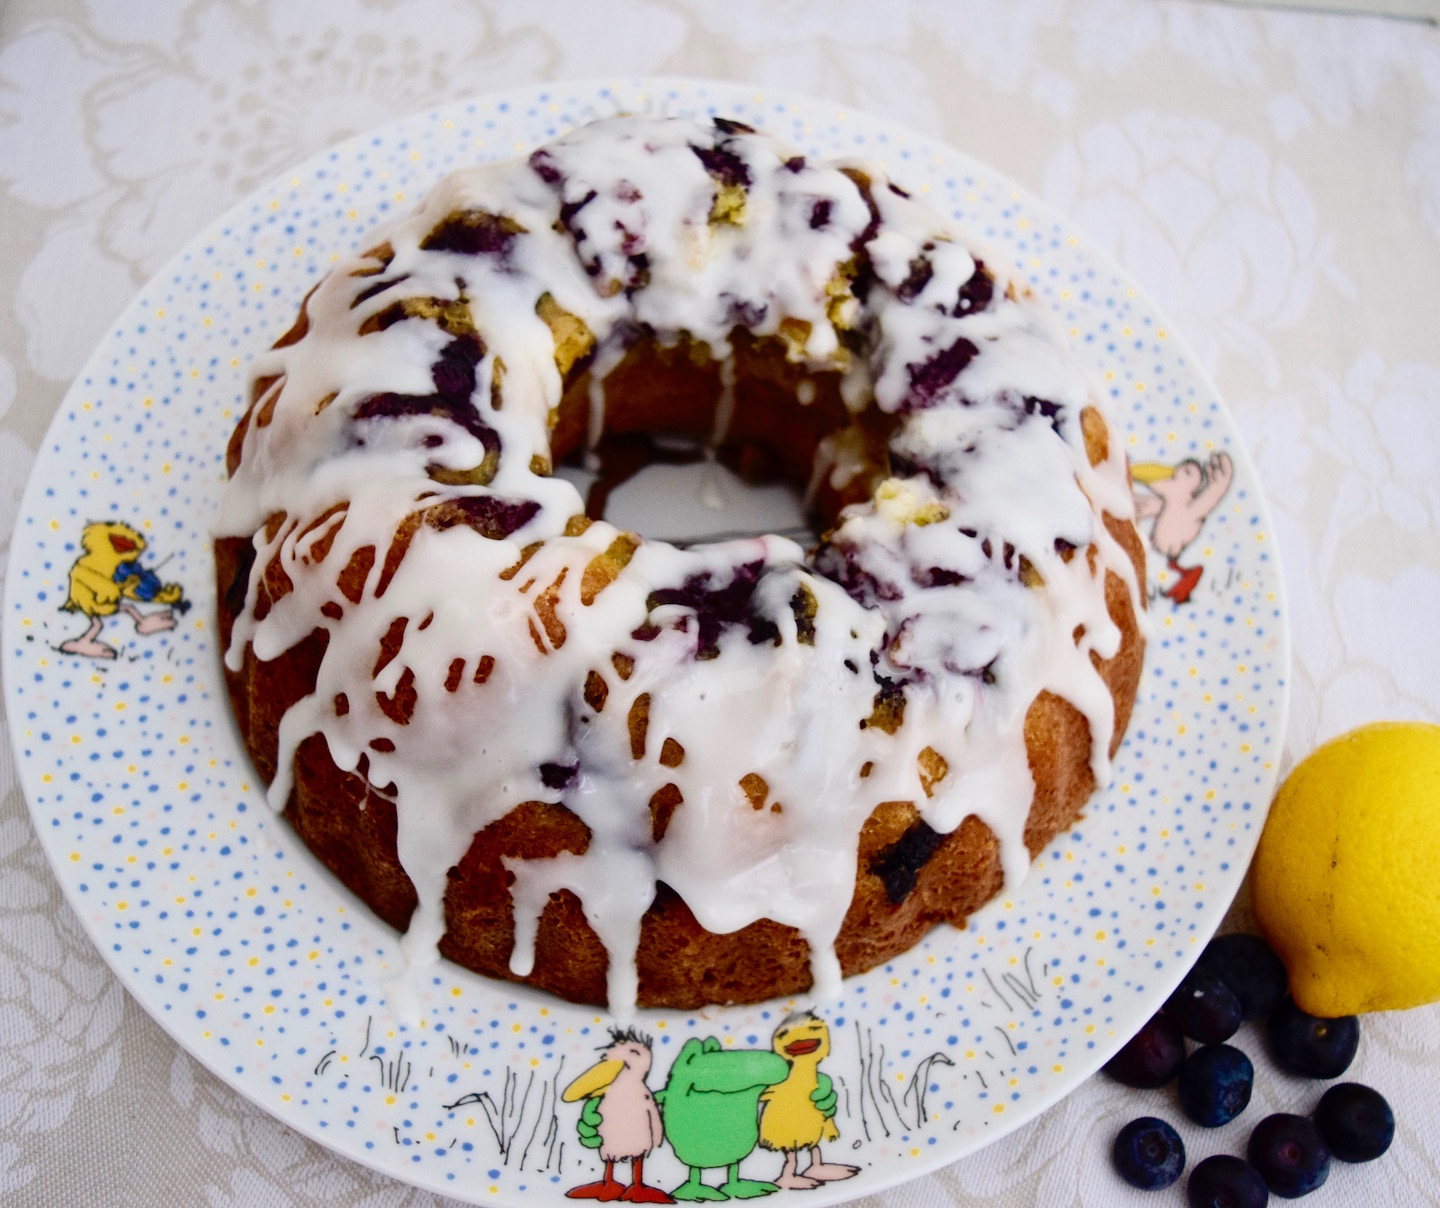 Lemon and Blueberry Bundt Cake